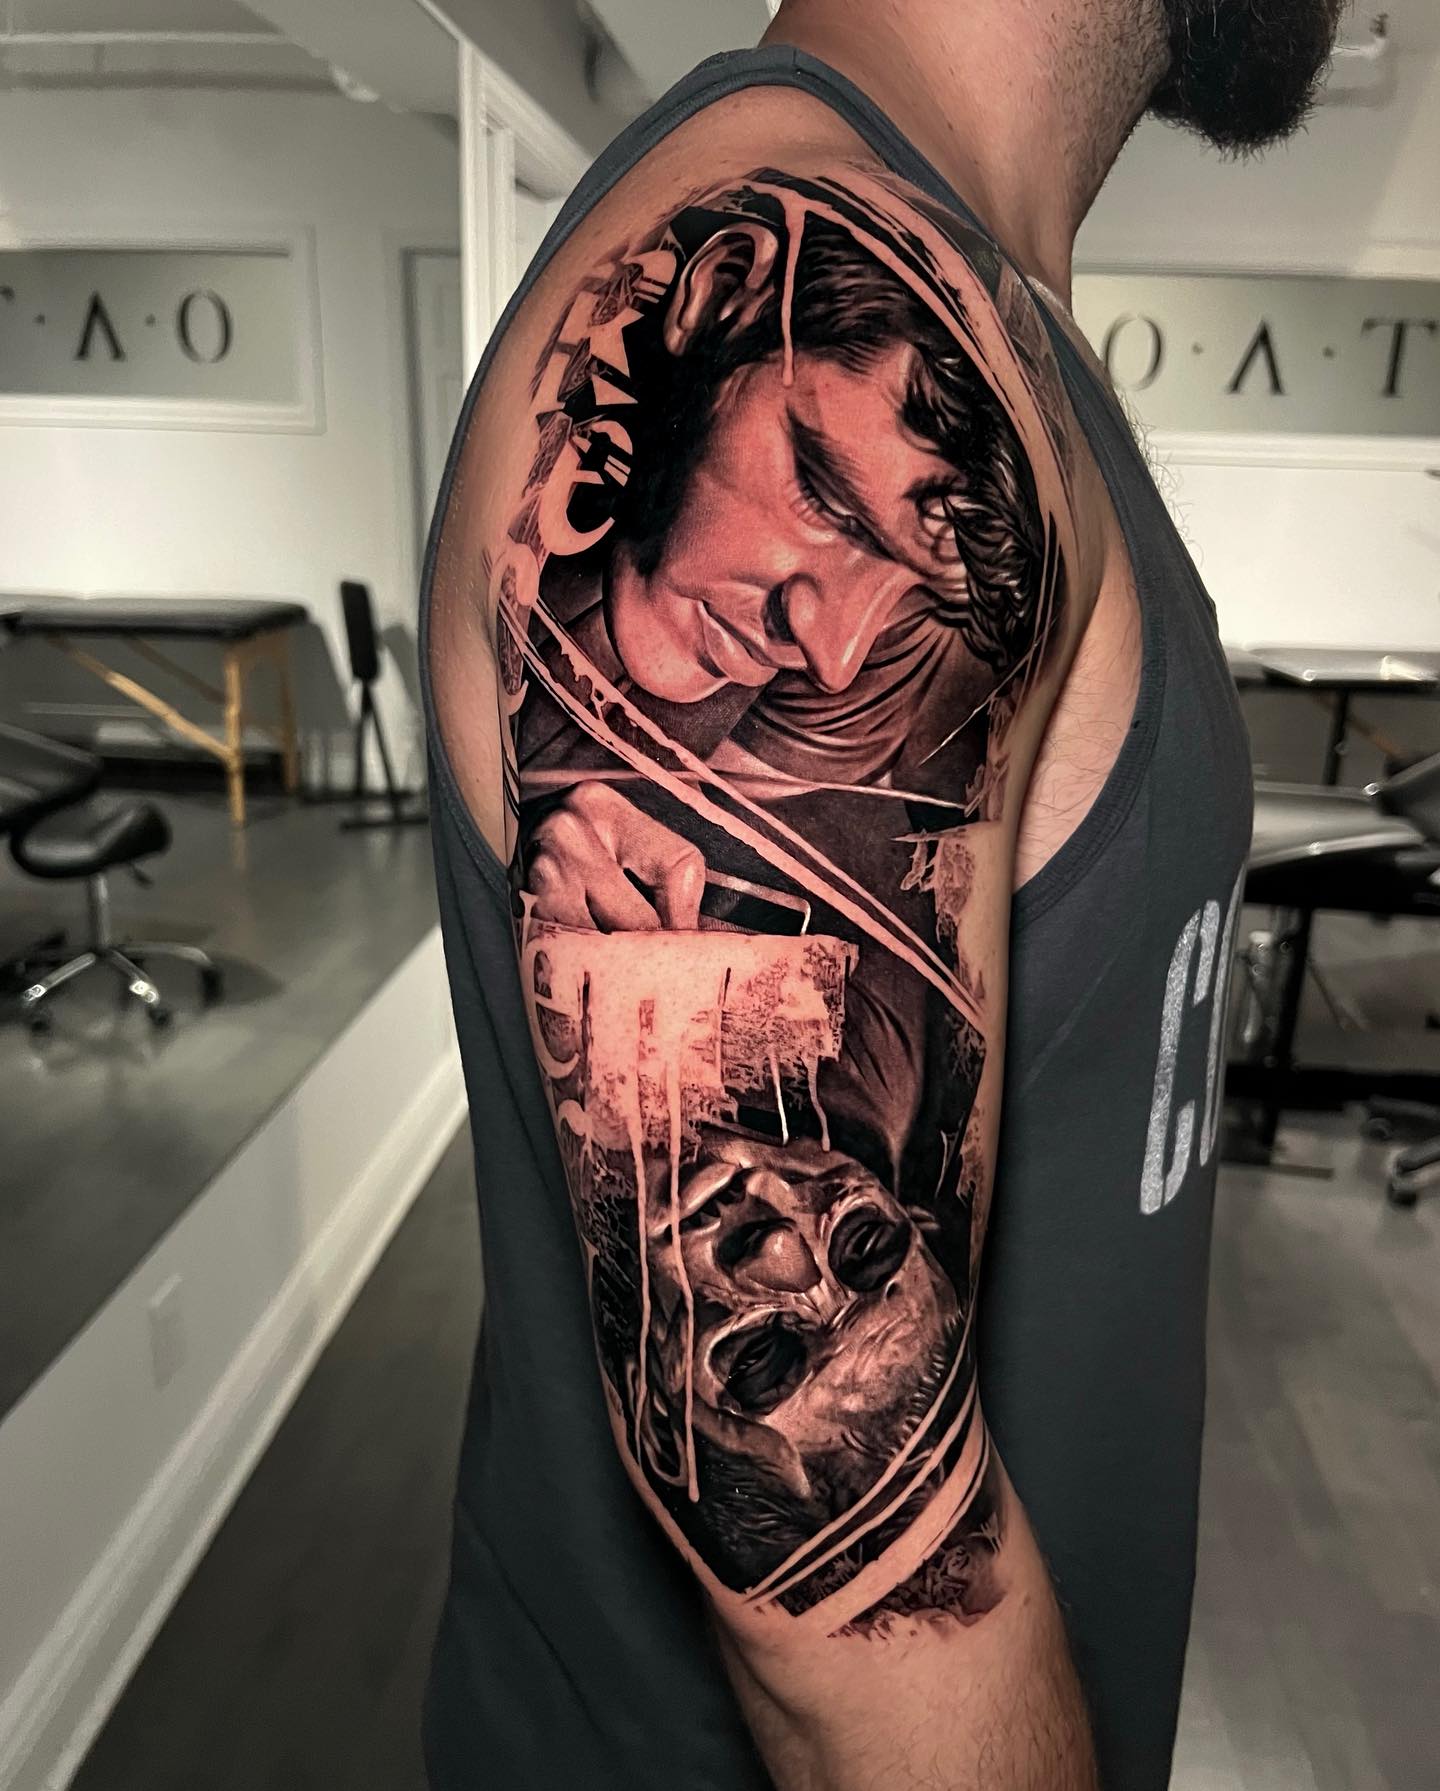 Different angle of this arm sleeve 🖤 ______ #tattoo #tattoos  #tattooartists #tattooart #armsleevetattoo #tattoosleeve #ornamentaltatt...  | Instagram